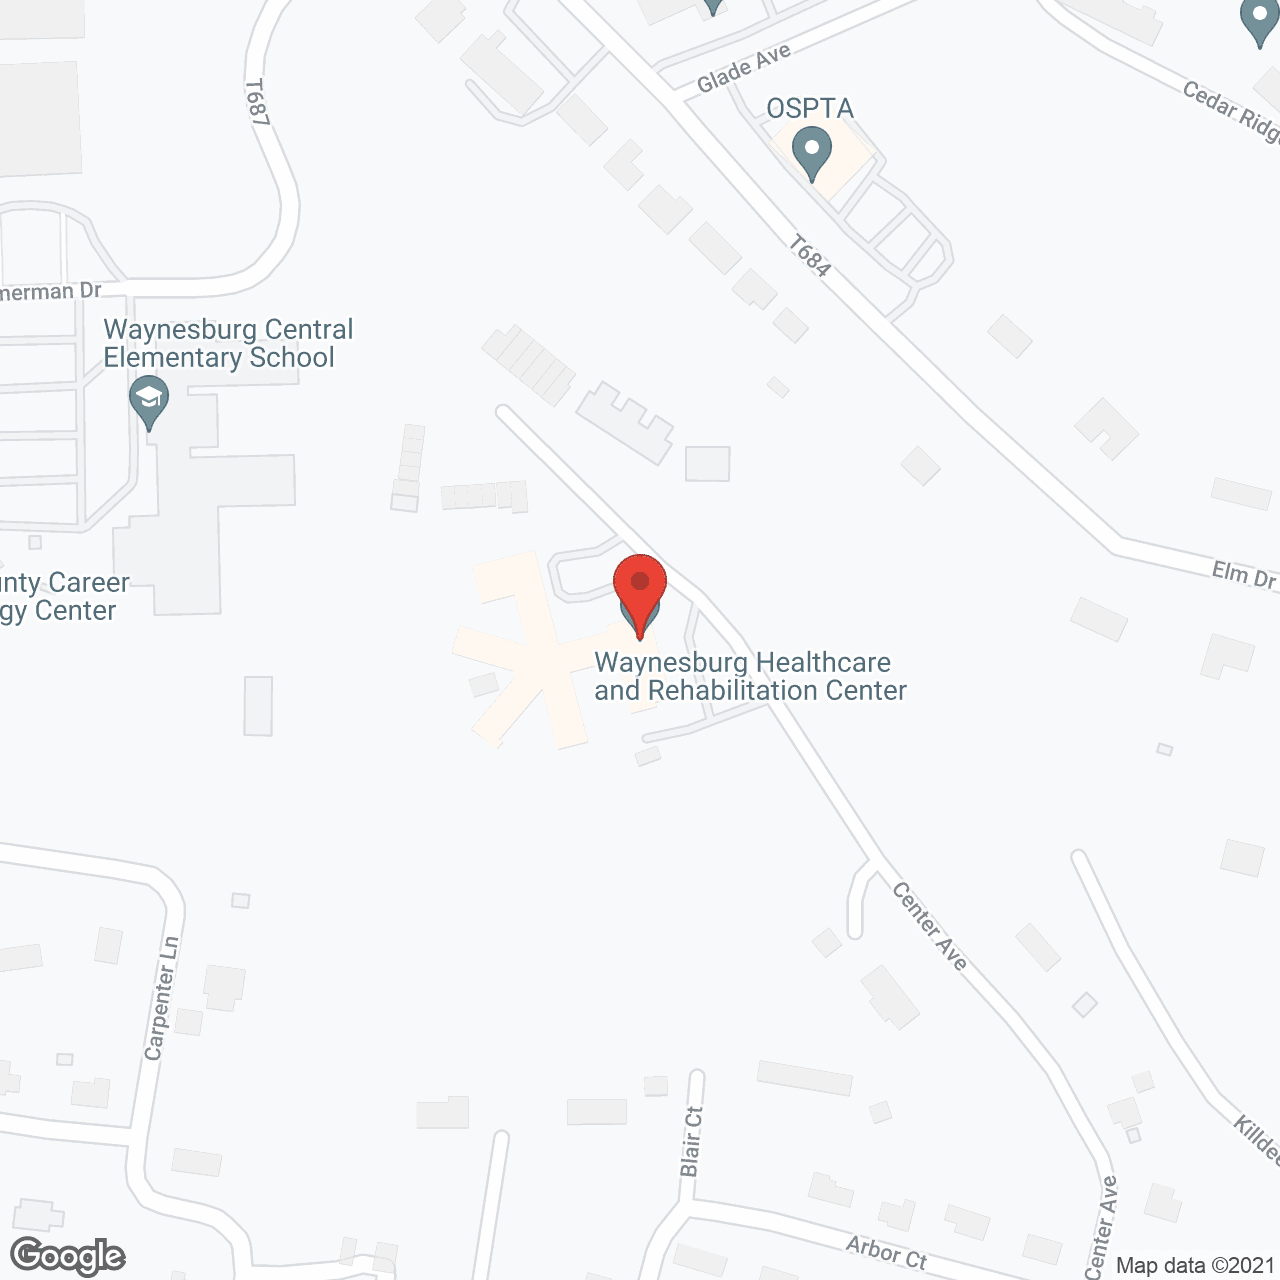 Golden LivingCenter - Waynesburg in google map